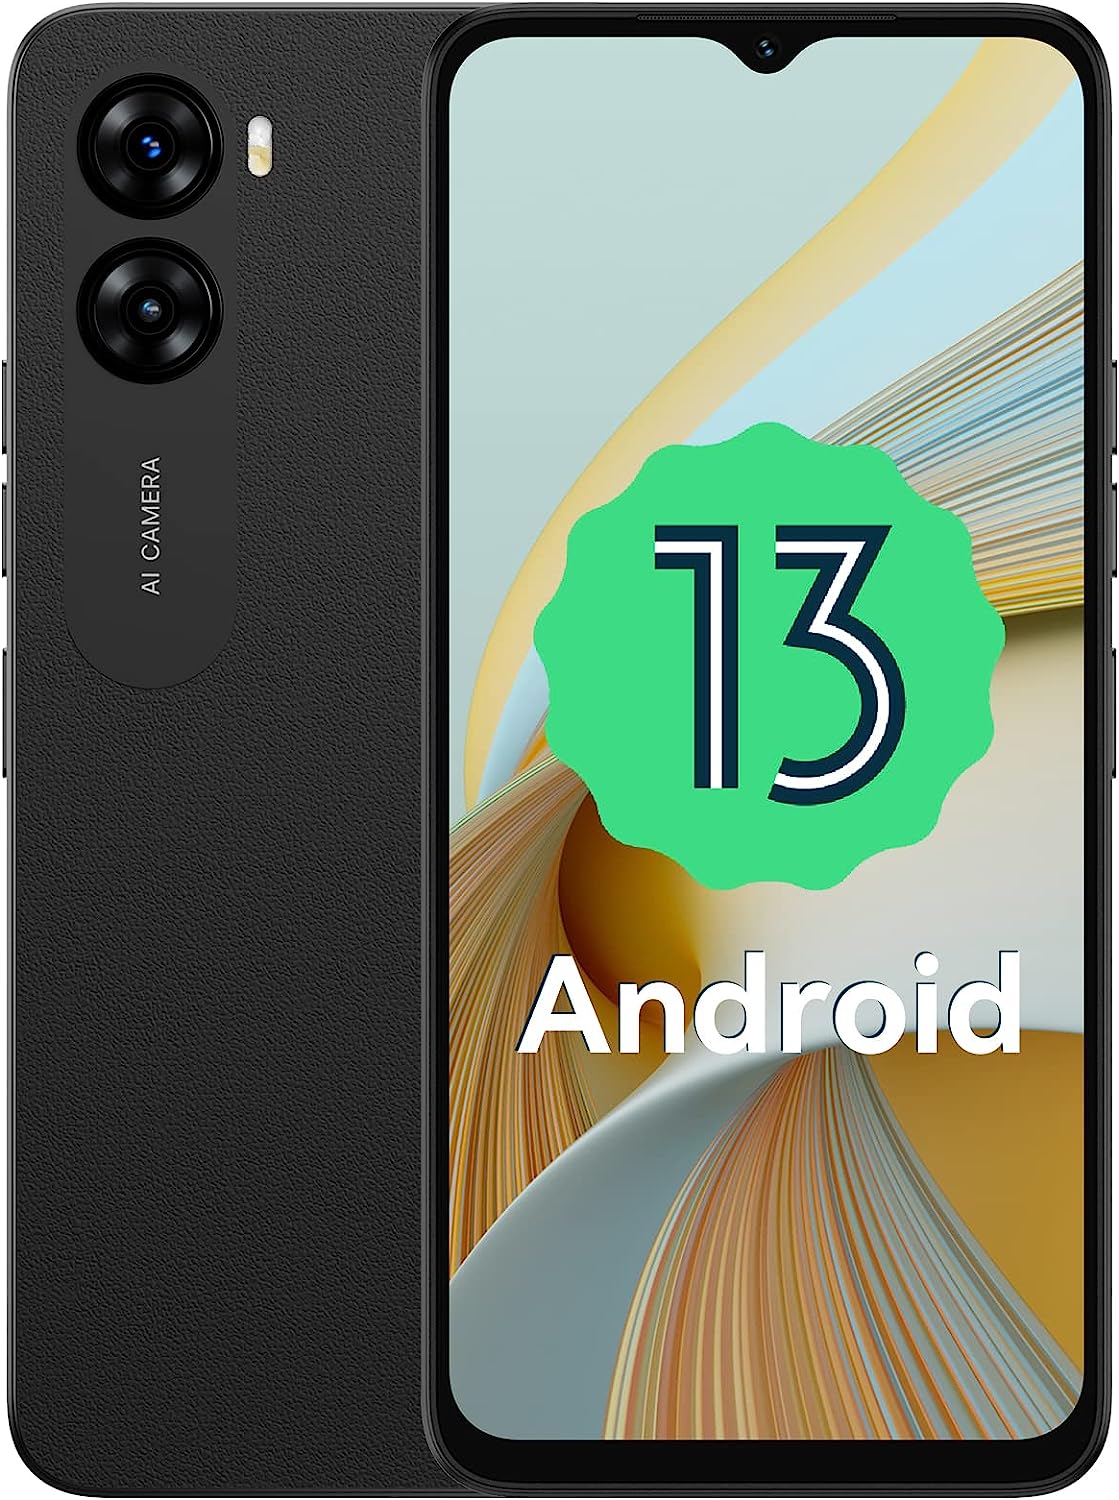 UMIDIGI Unlocked Smartphones G3, Android 13 Unlocked Smartphone, Dual Sim 4G LTE Mobile Phone, 4/64GB(1TBG Expandable), 6.52